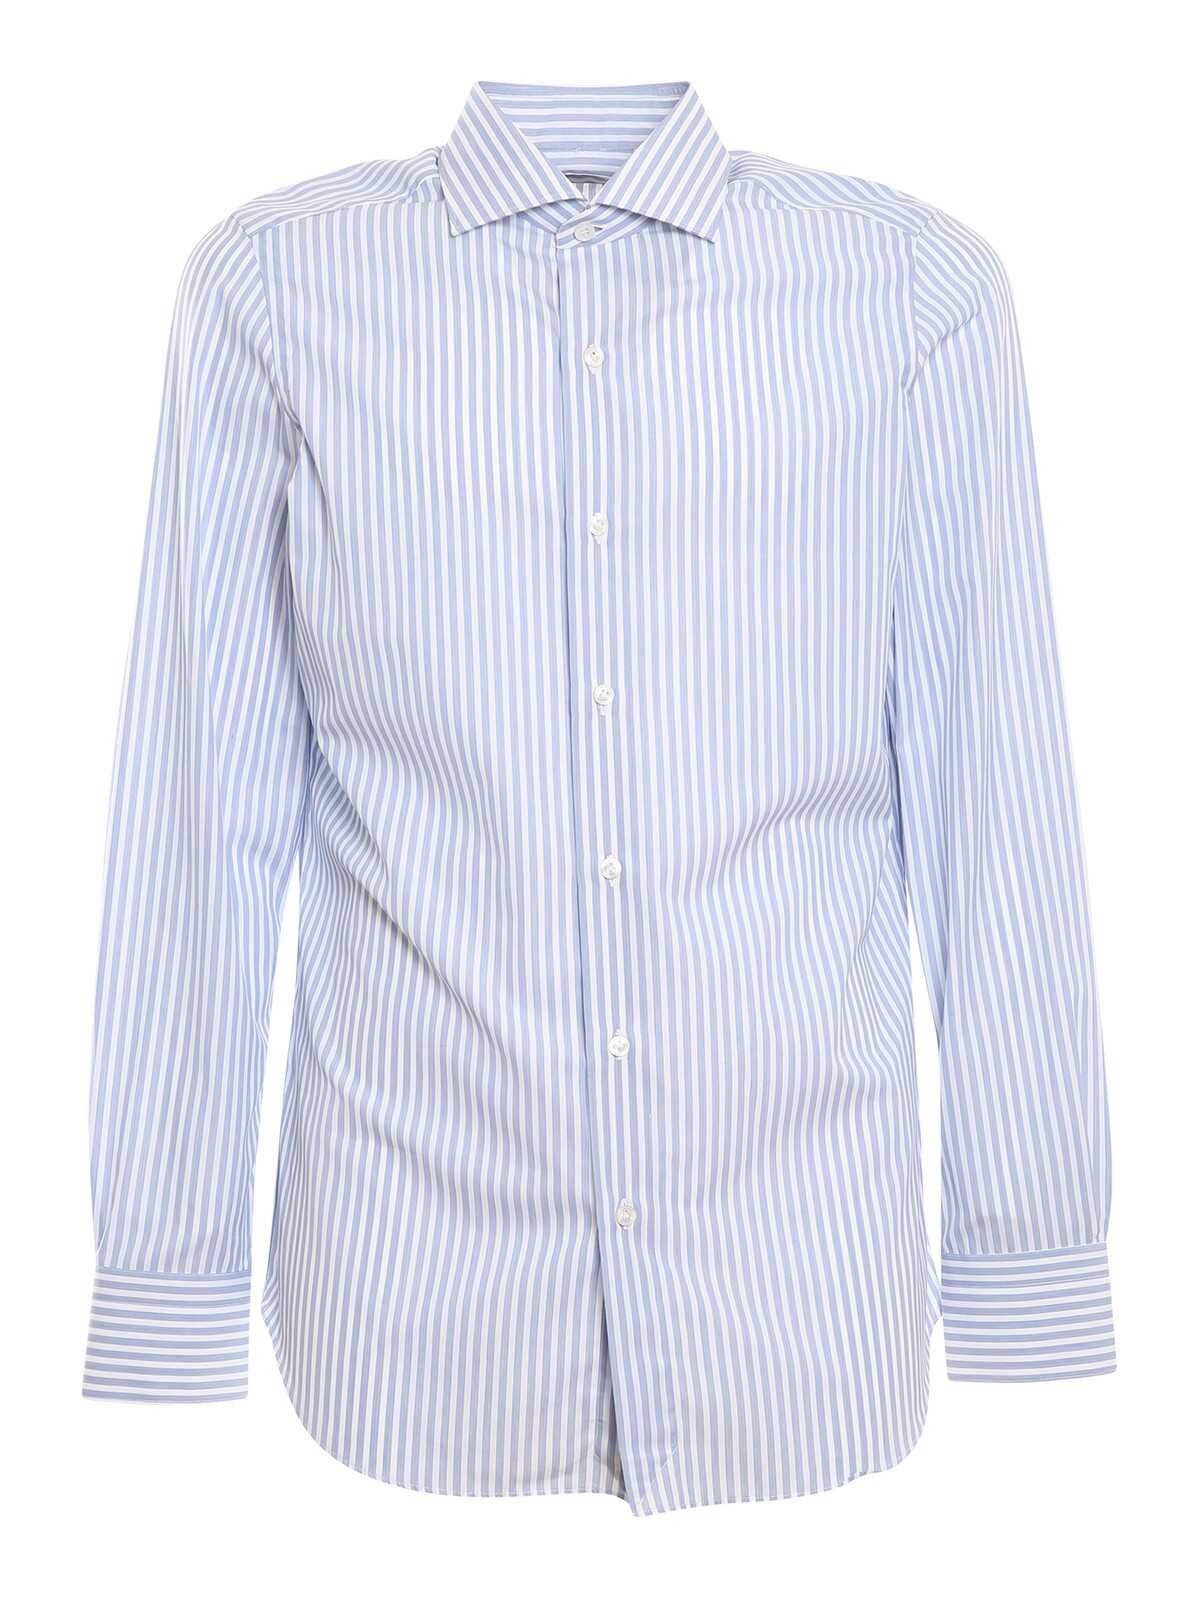 FINAMORE Finamore Shirt A1015.MILANO 2 STRIPES Stripes